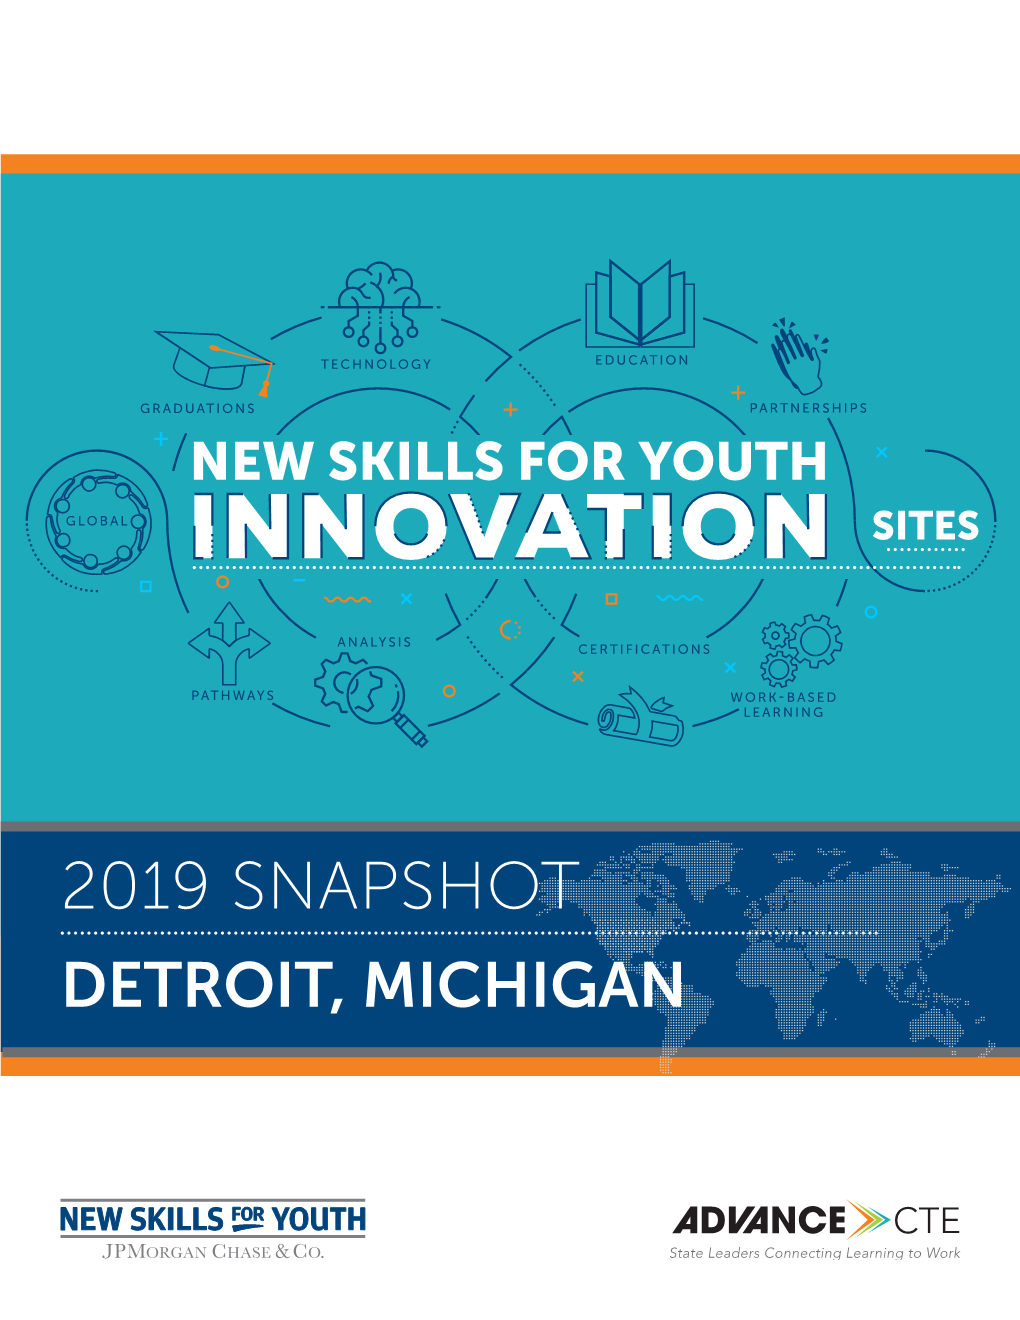 2019 Snapshot Detroit, Michigan 2019 Snapshot Detroit, Michigan Overview